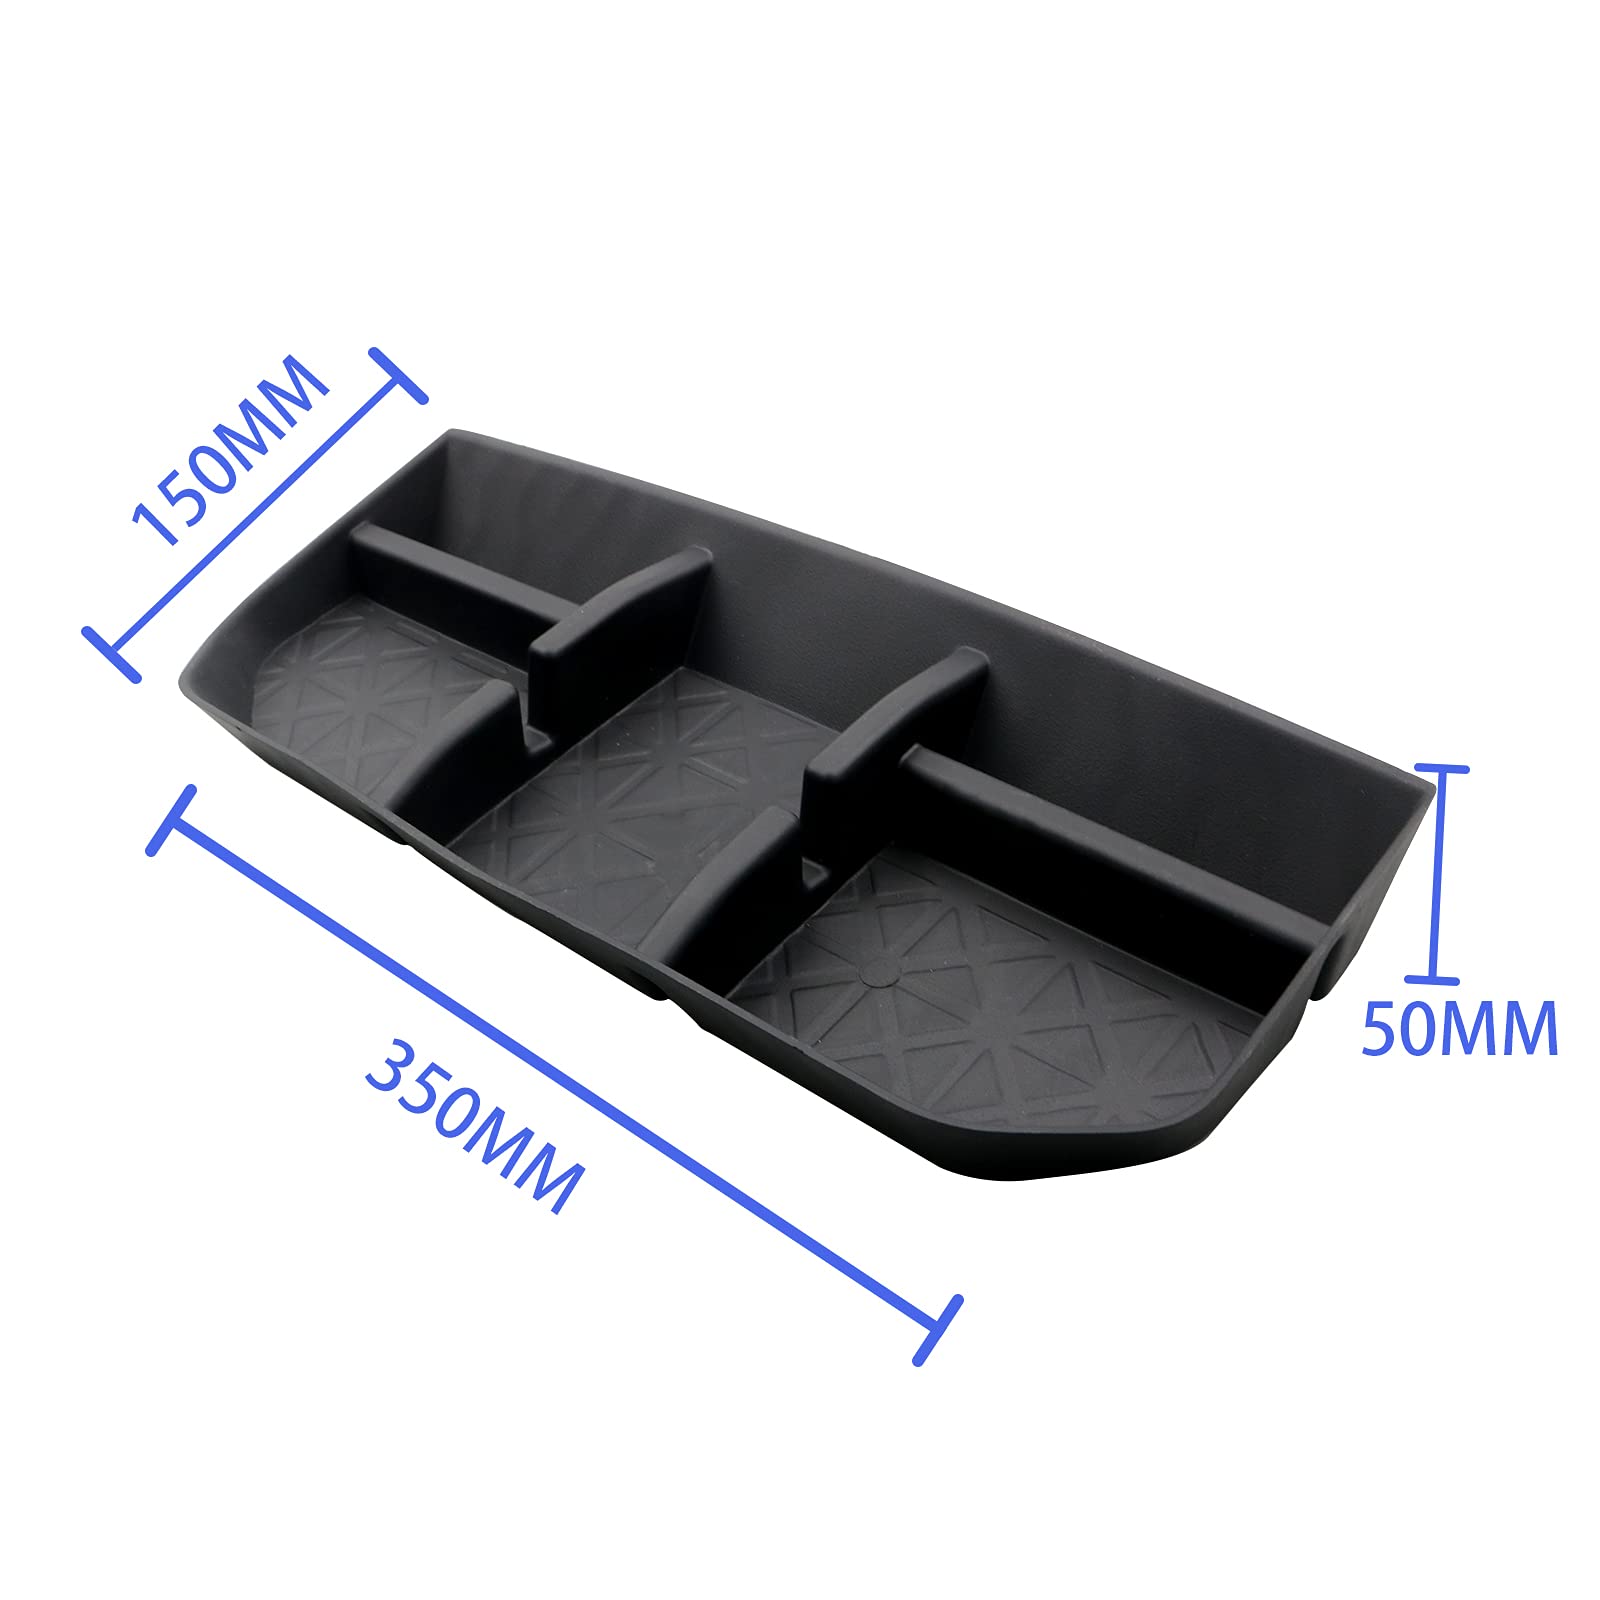 Ford F 150 Dashboard Console Tray 2021+ - LFOTPP Car Accessories